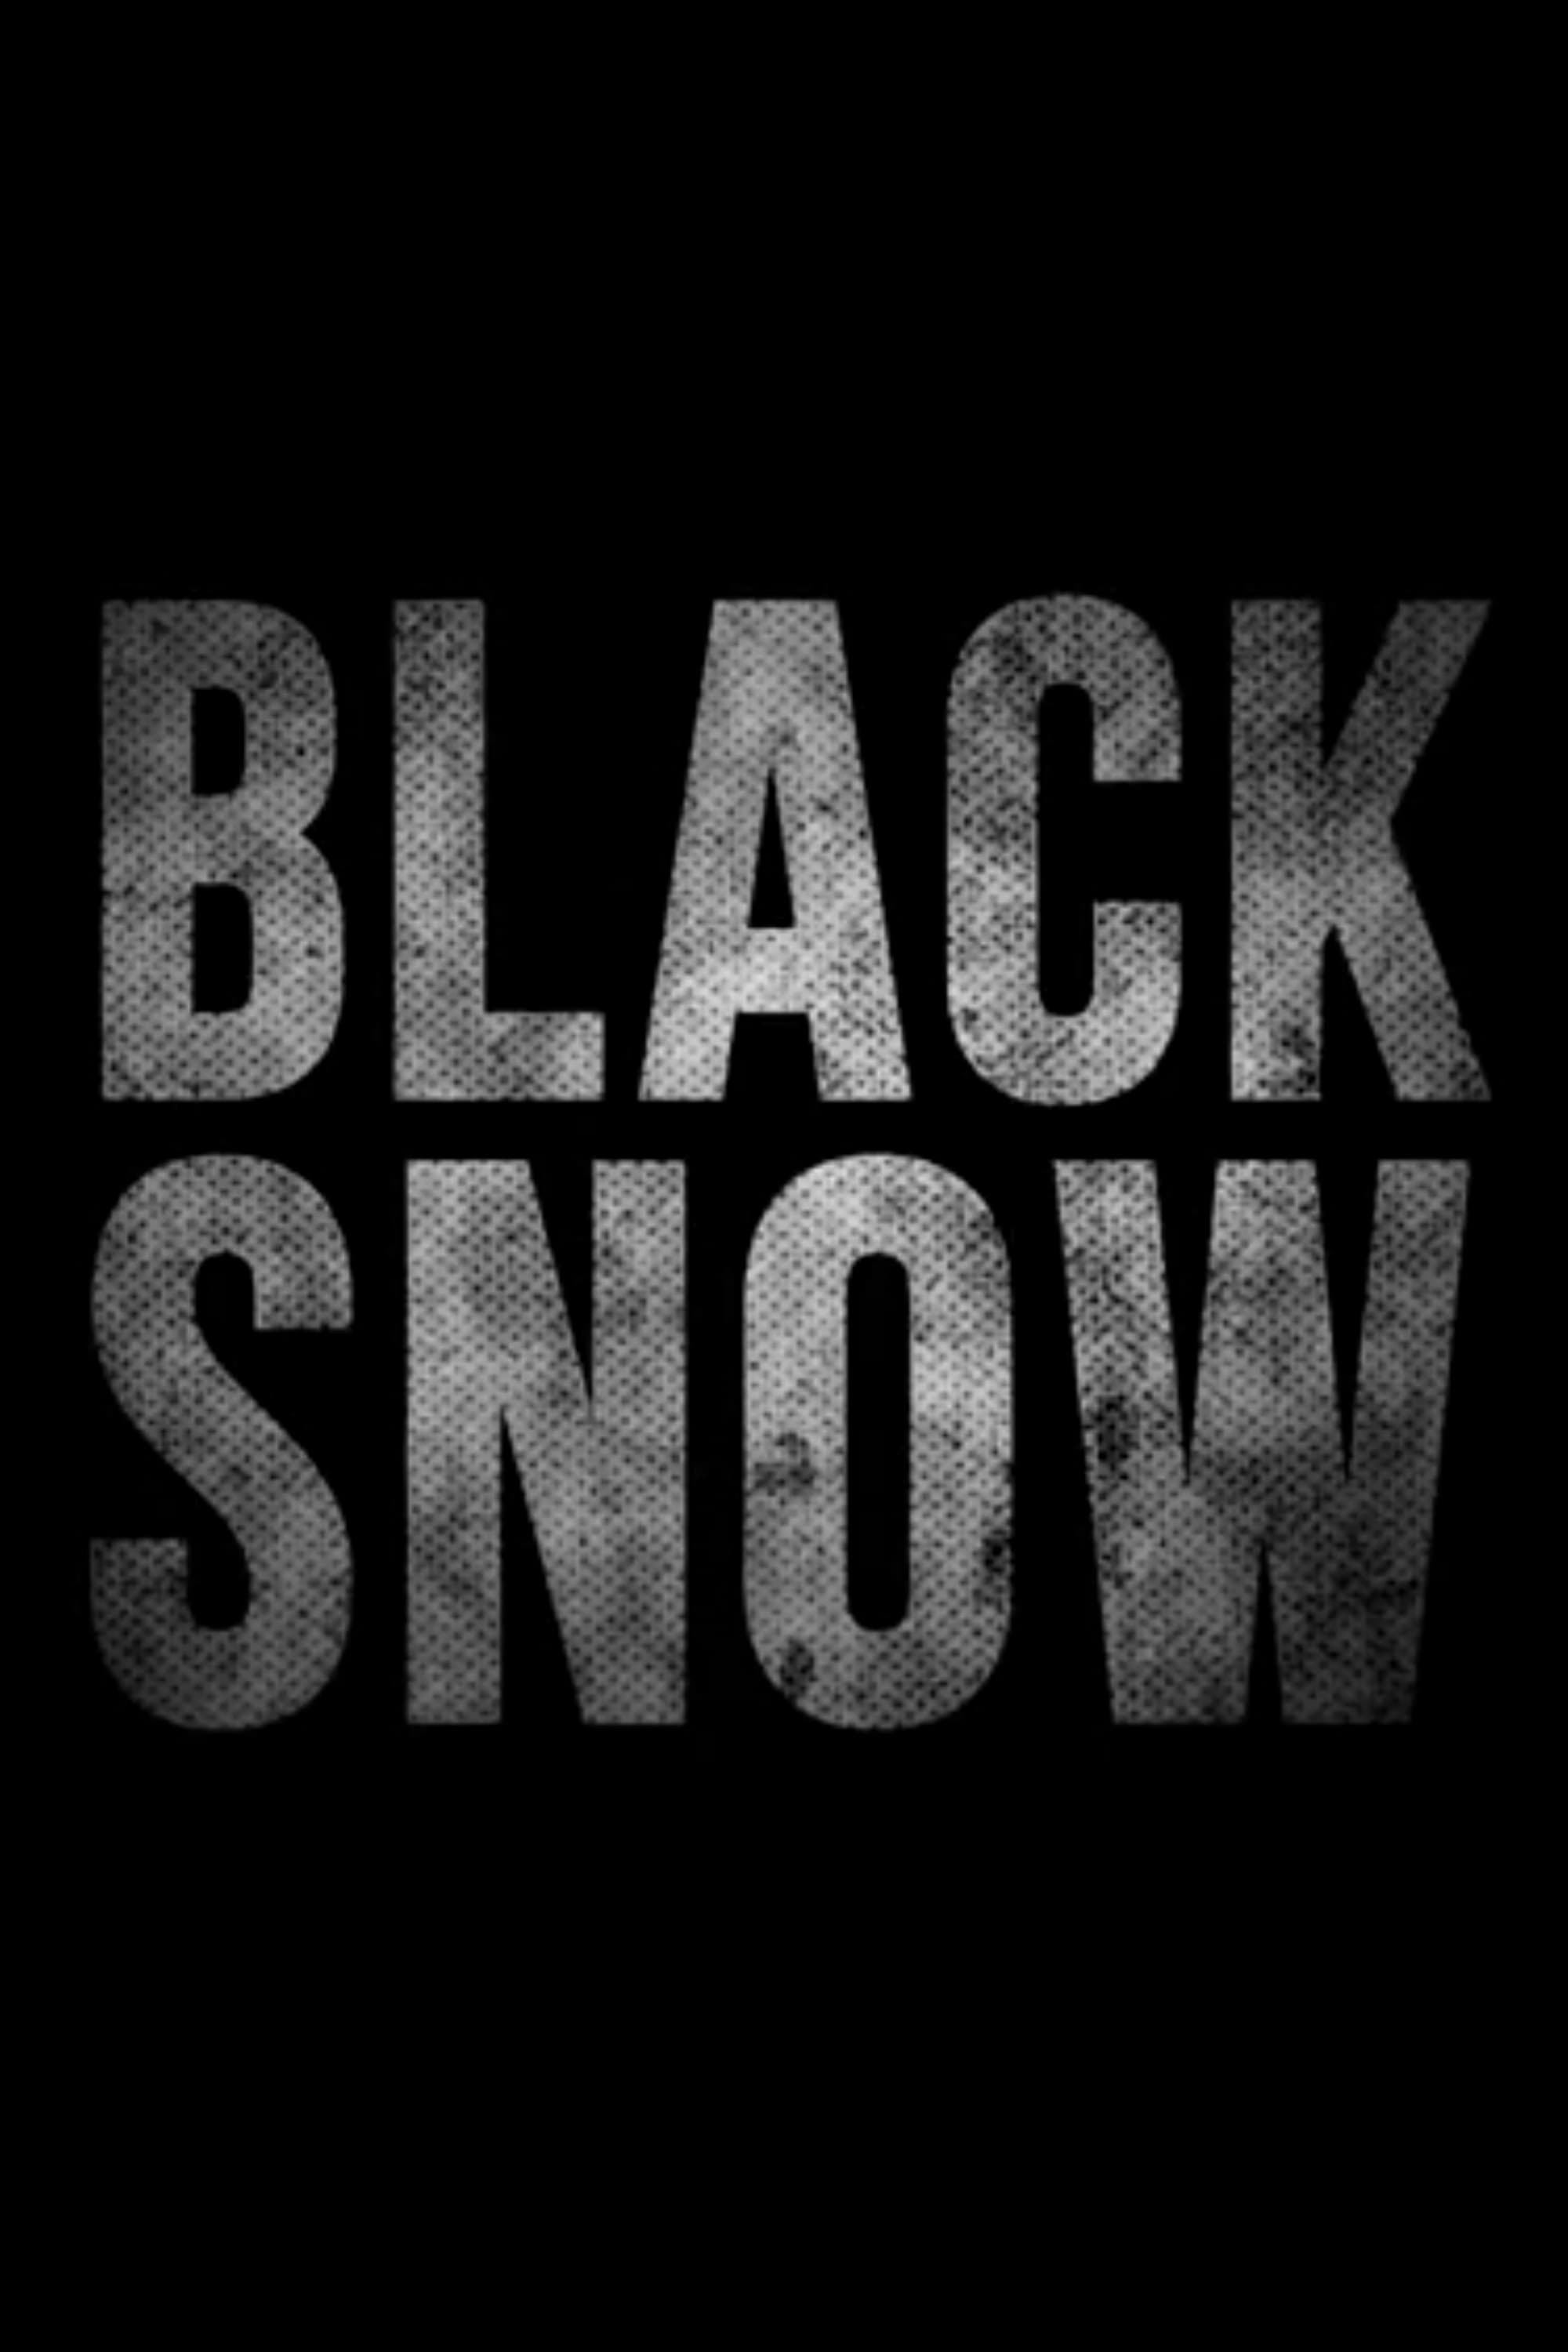 Black Snow